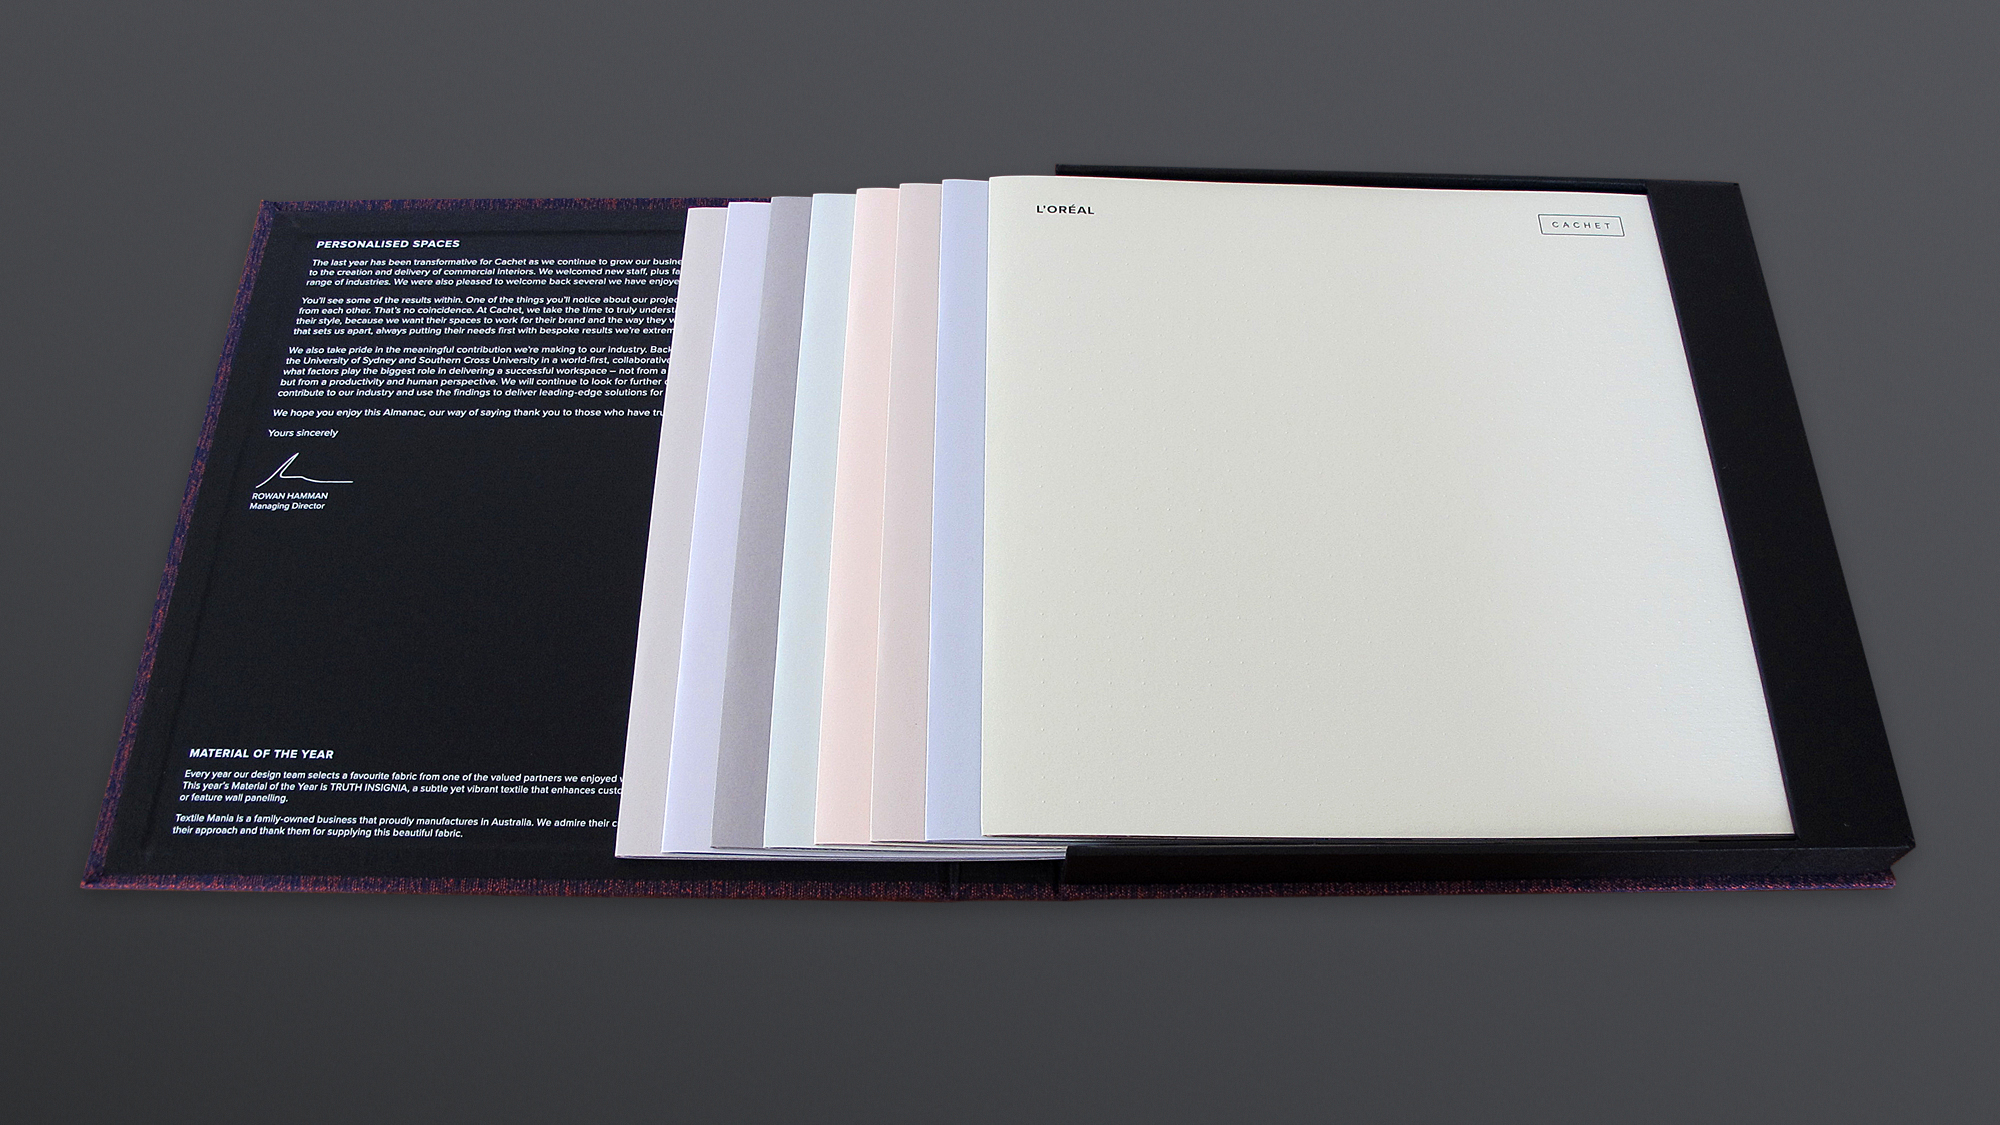 Entity-3-Three-Brand-Design-Agency-Sydney-Cachet-9-experience-print-almanac-project-covers